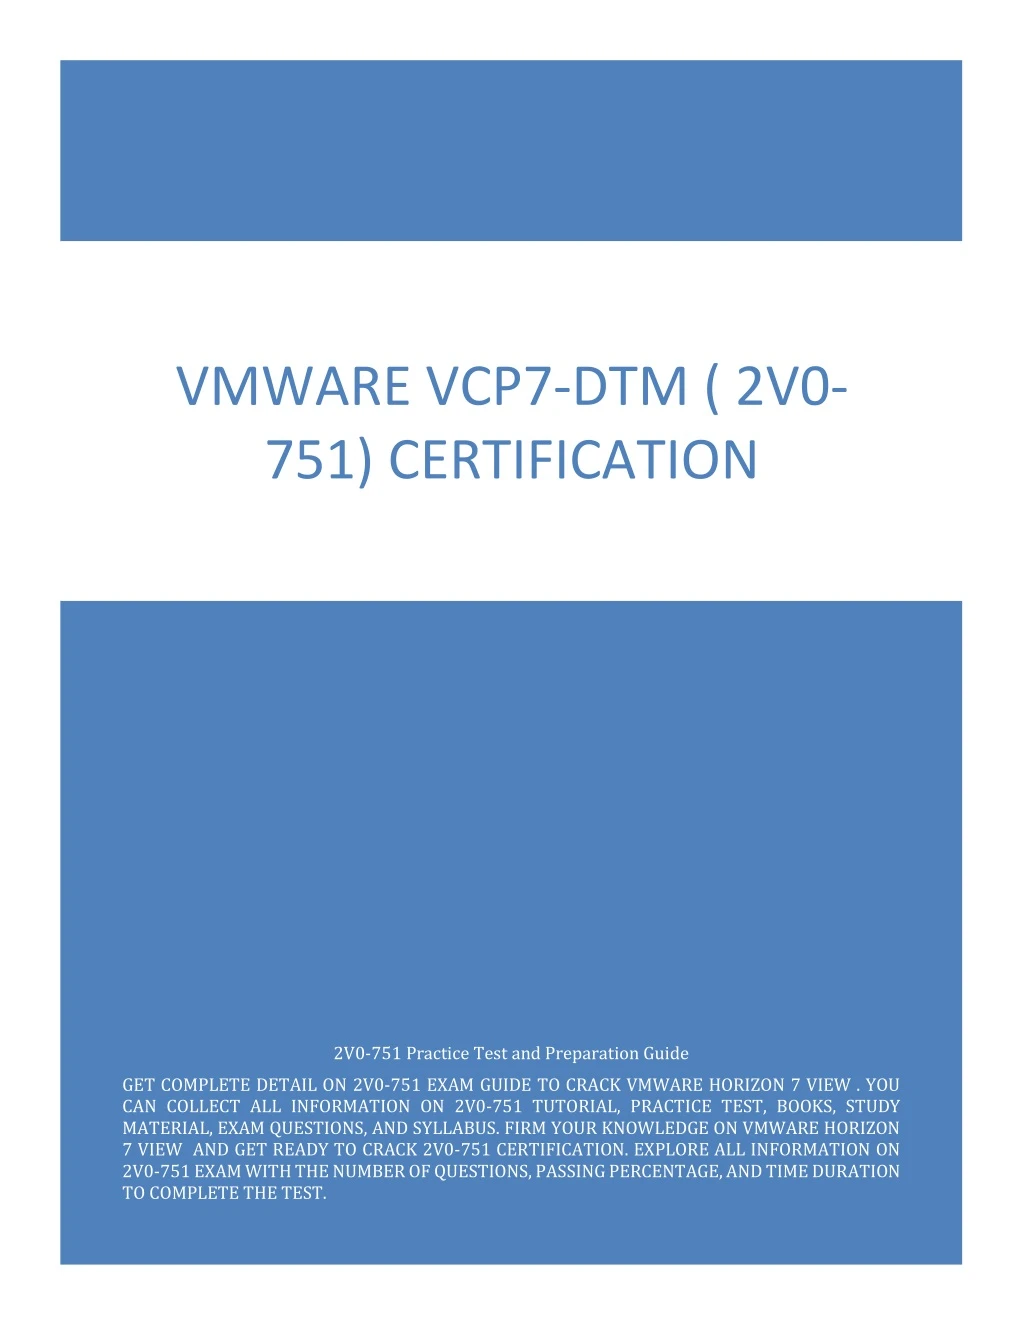 vmware vcp7 dtm 2v0 751 certification